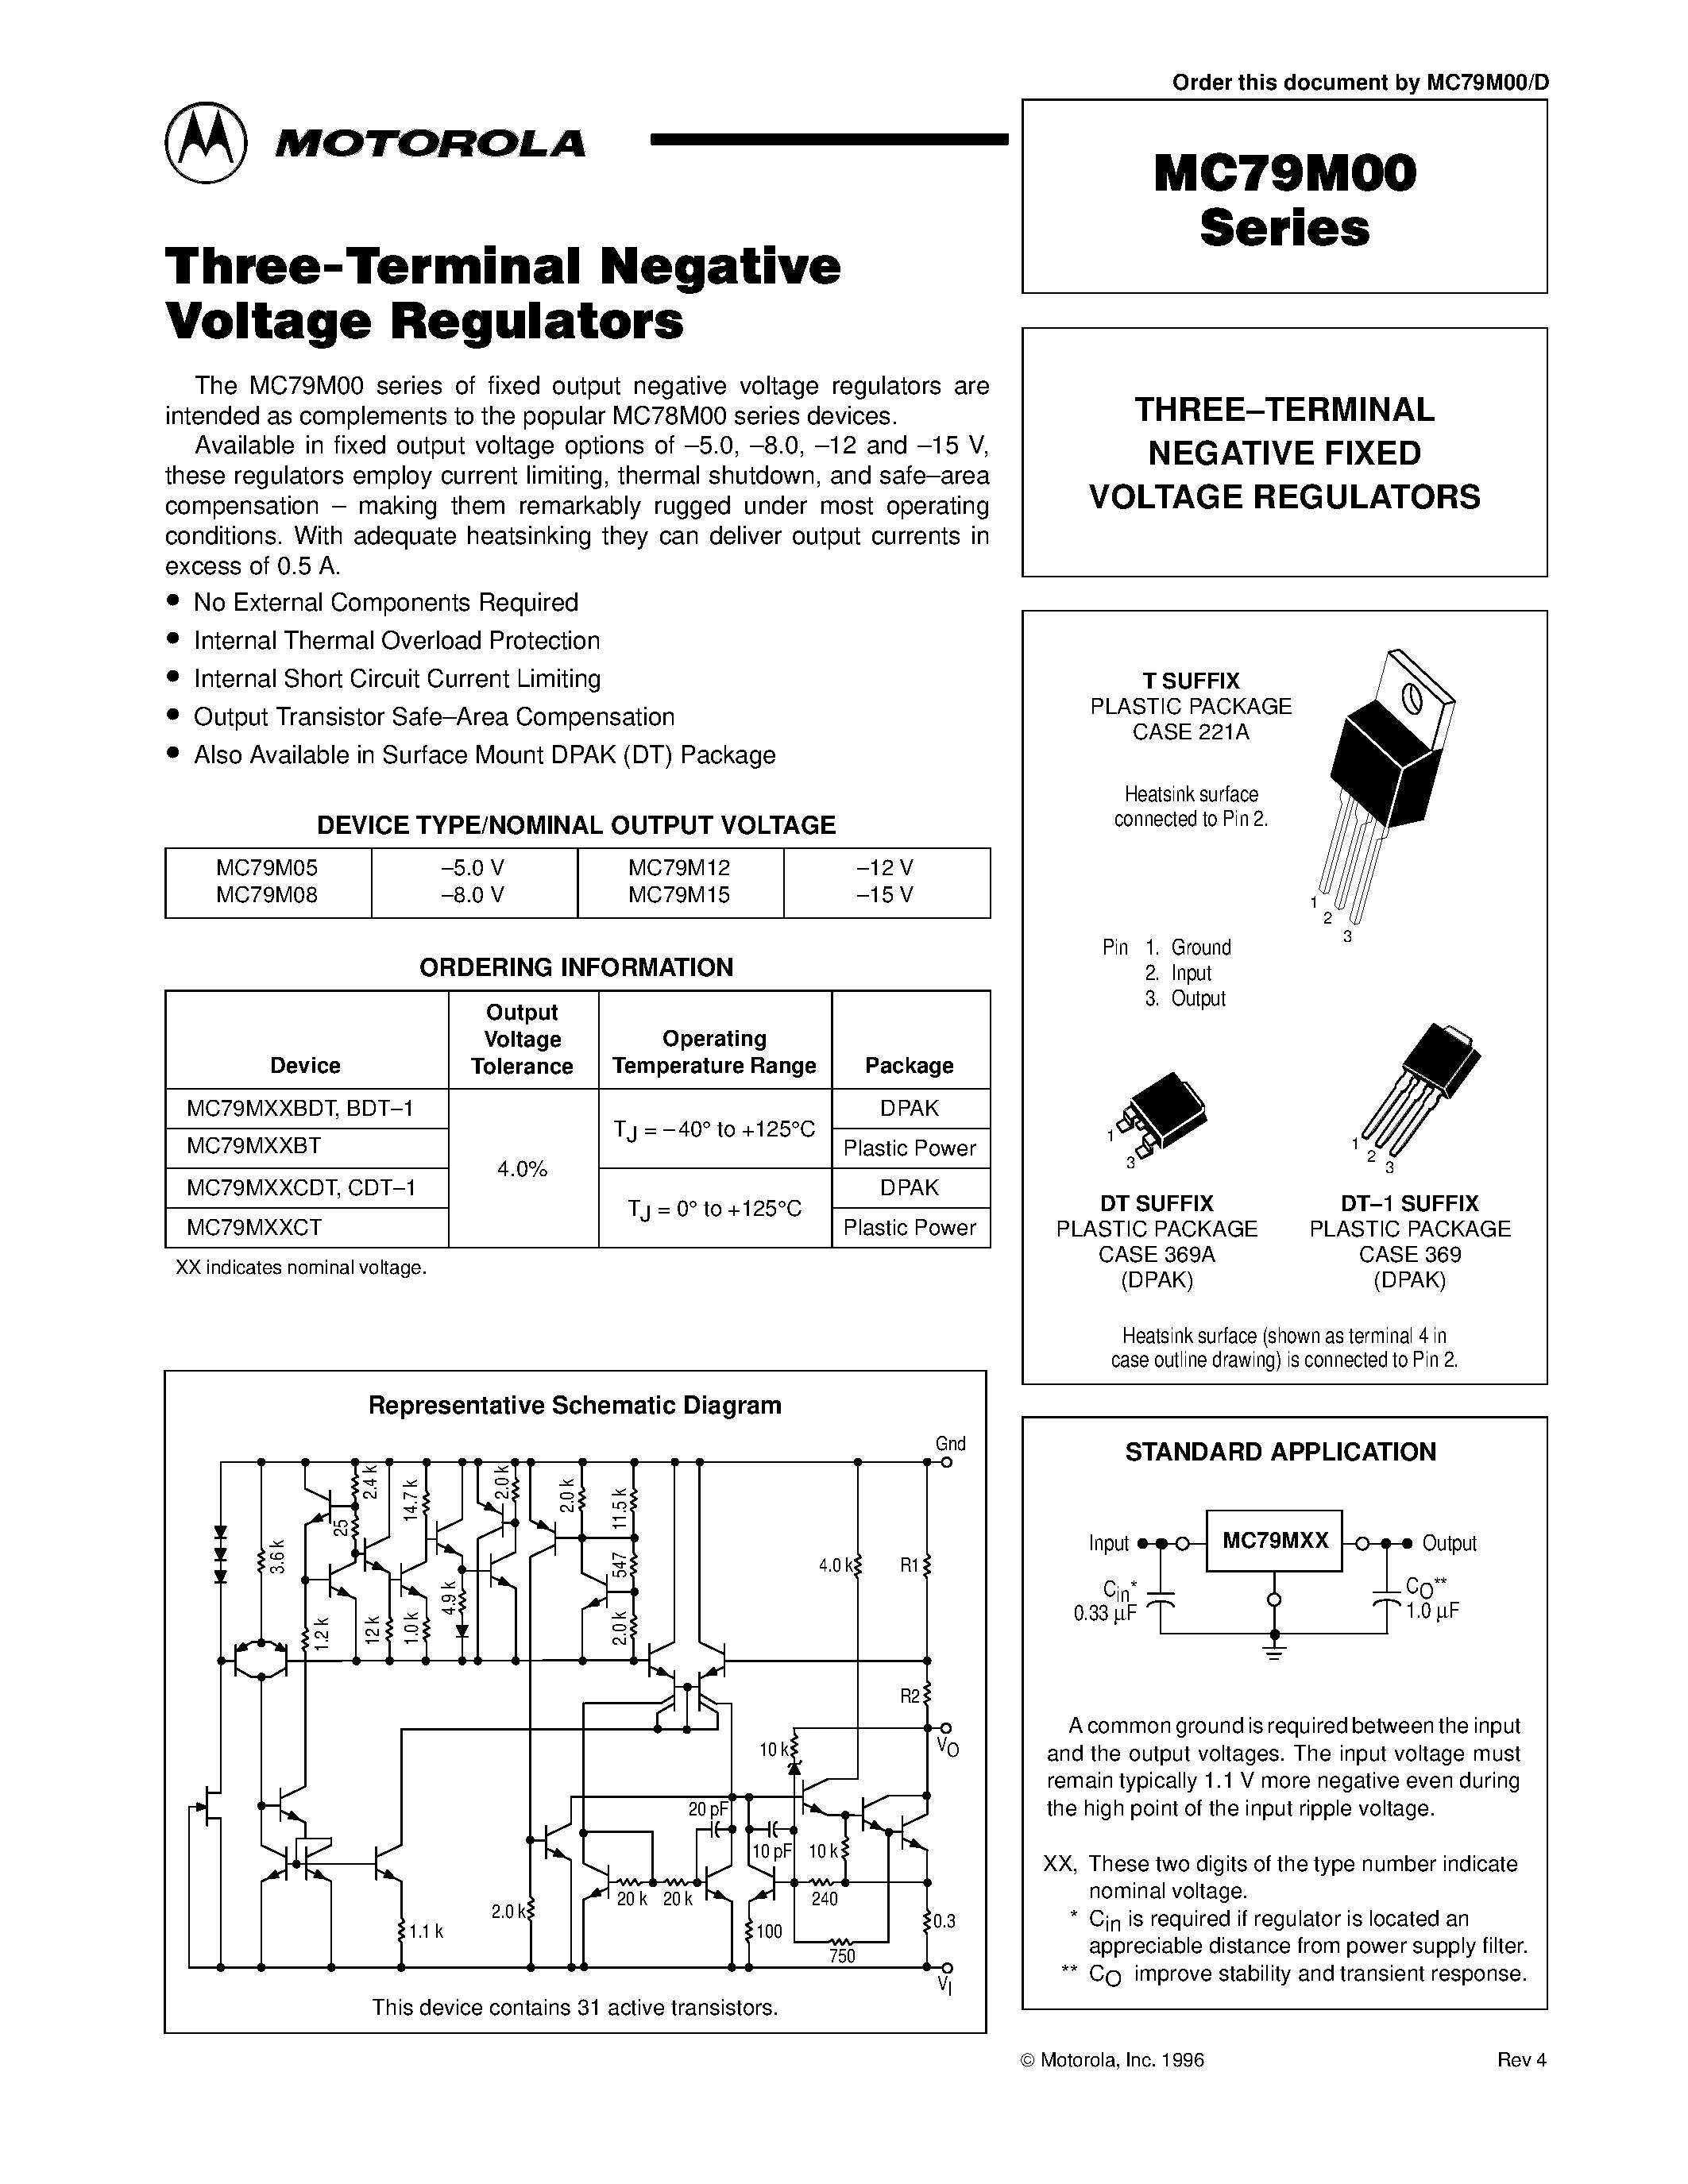 Datasheet MC79M15CDT-1 - THREE-TERMINAL NEGATIVE FIXED VOLTAGE REGULATORS page 1